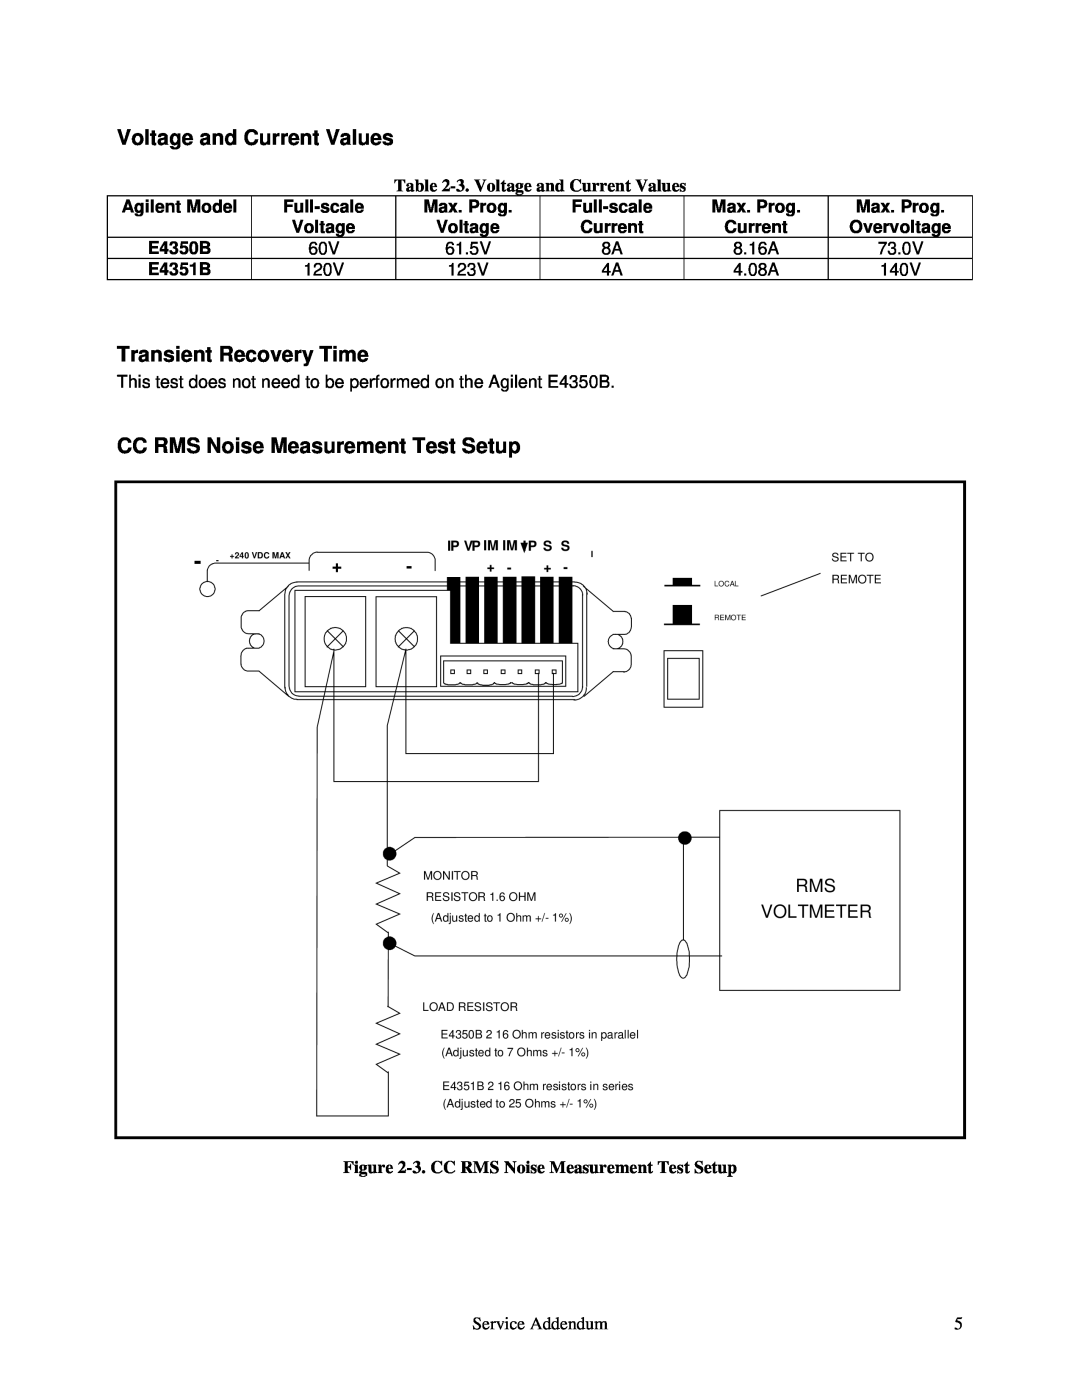 Agilent Technologies E4350B Voltage and Current Values, Transient Recovery Time, CC RMS Noise Measurement Test Setup 